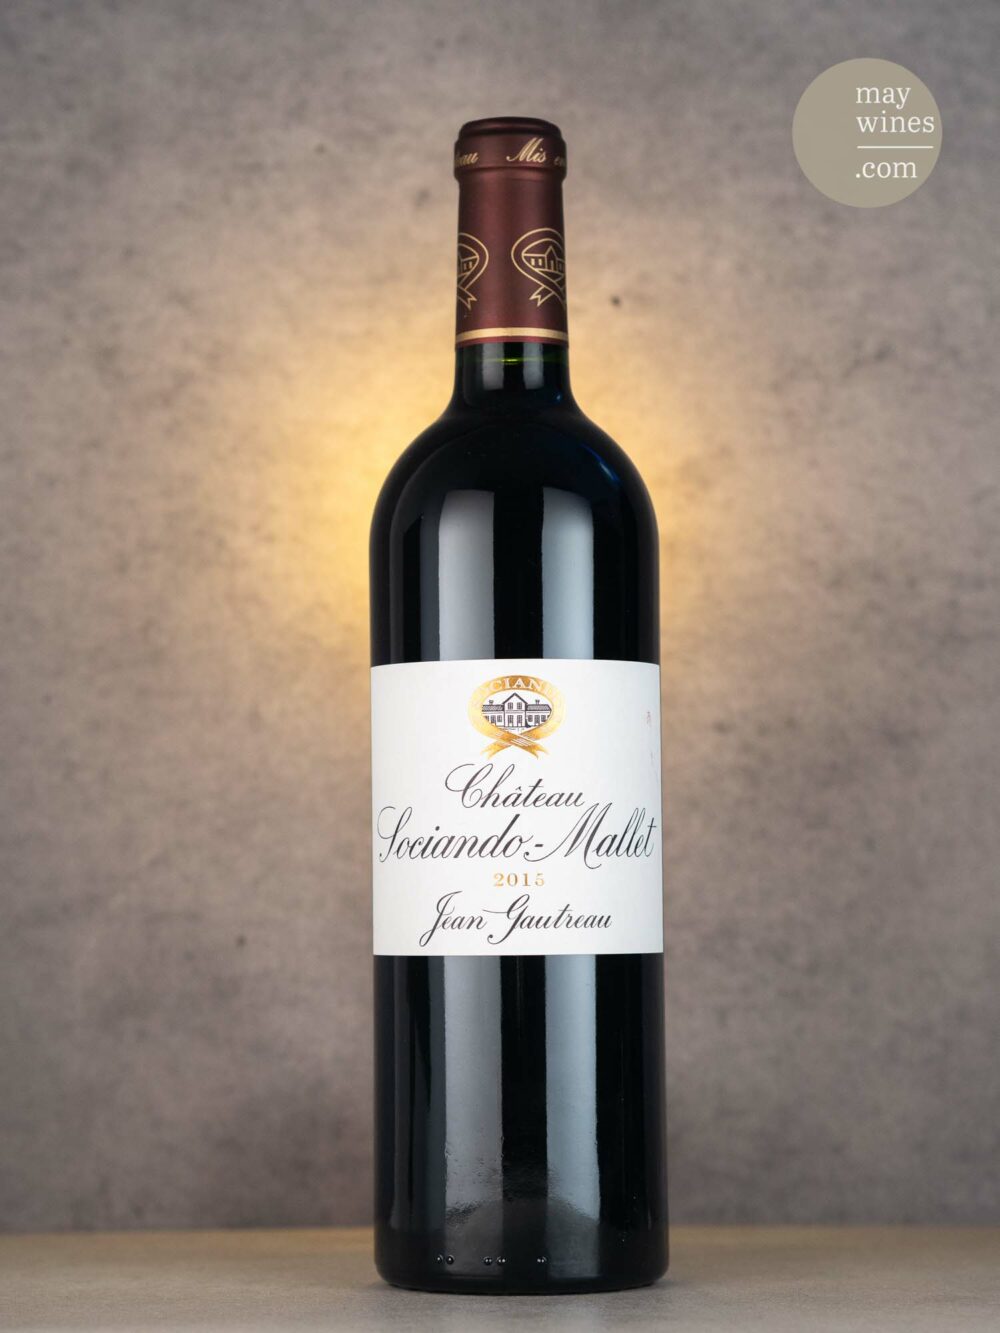 May Wines – Rotwein – 2015 Château Sociando-Mallet